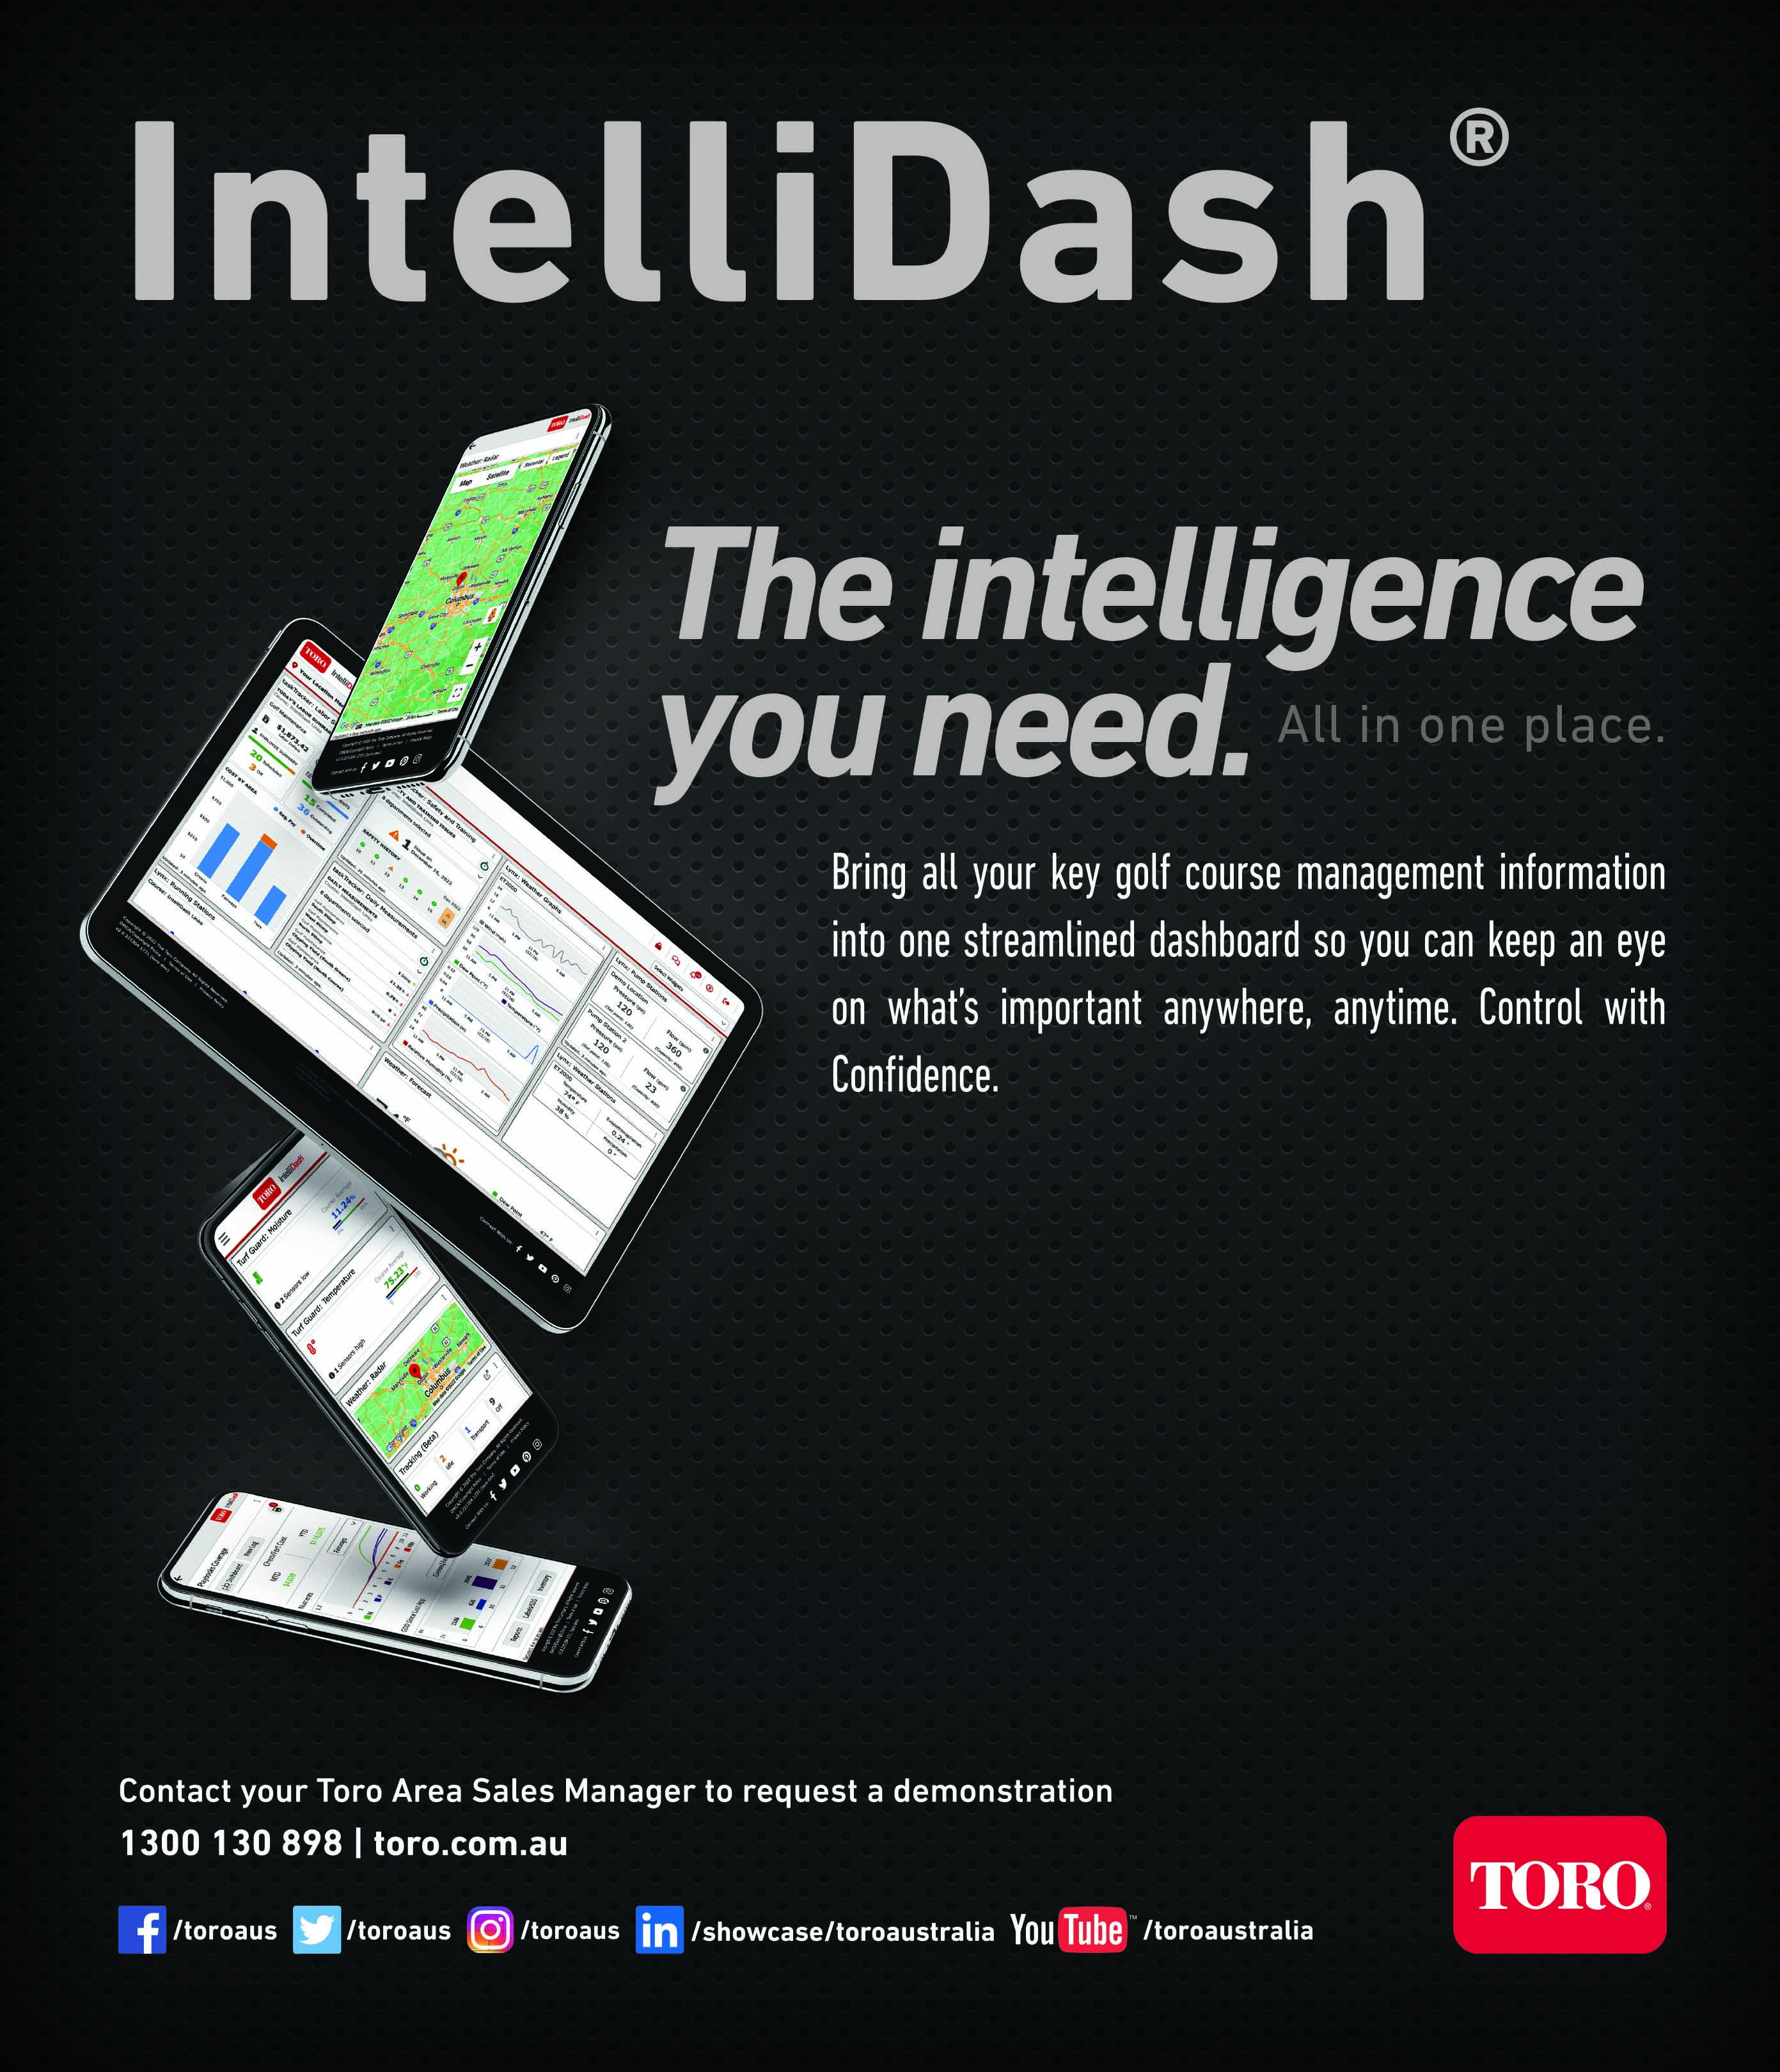 Toro’s new IntelliDash® Irrigation and Fleet Management Platform is the intelligence you need